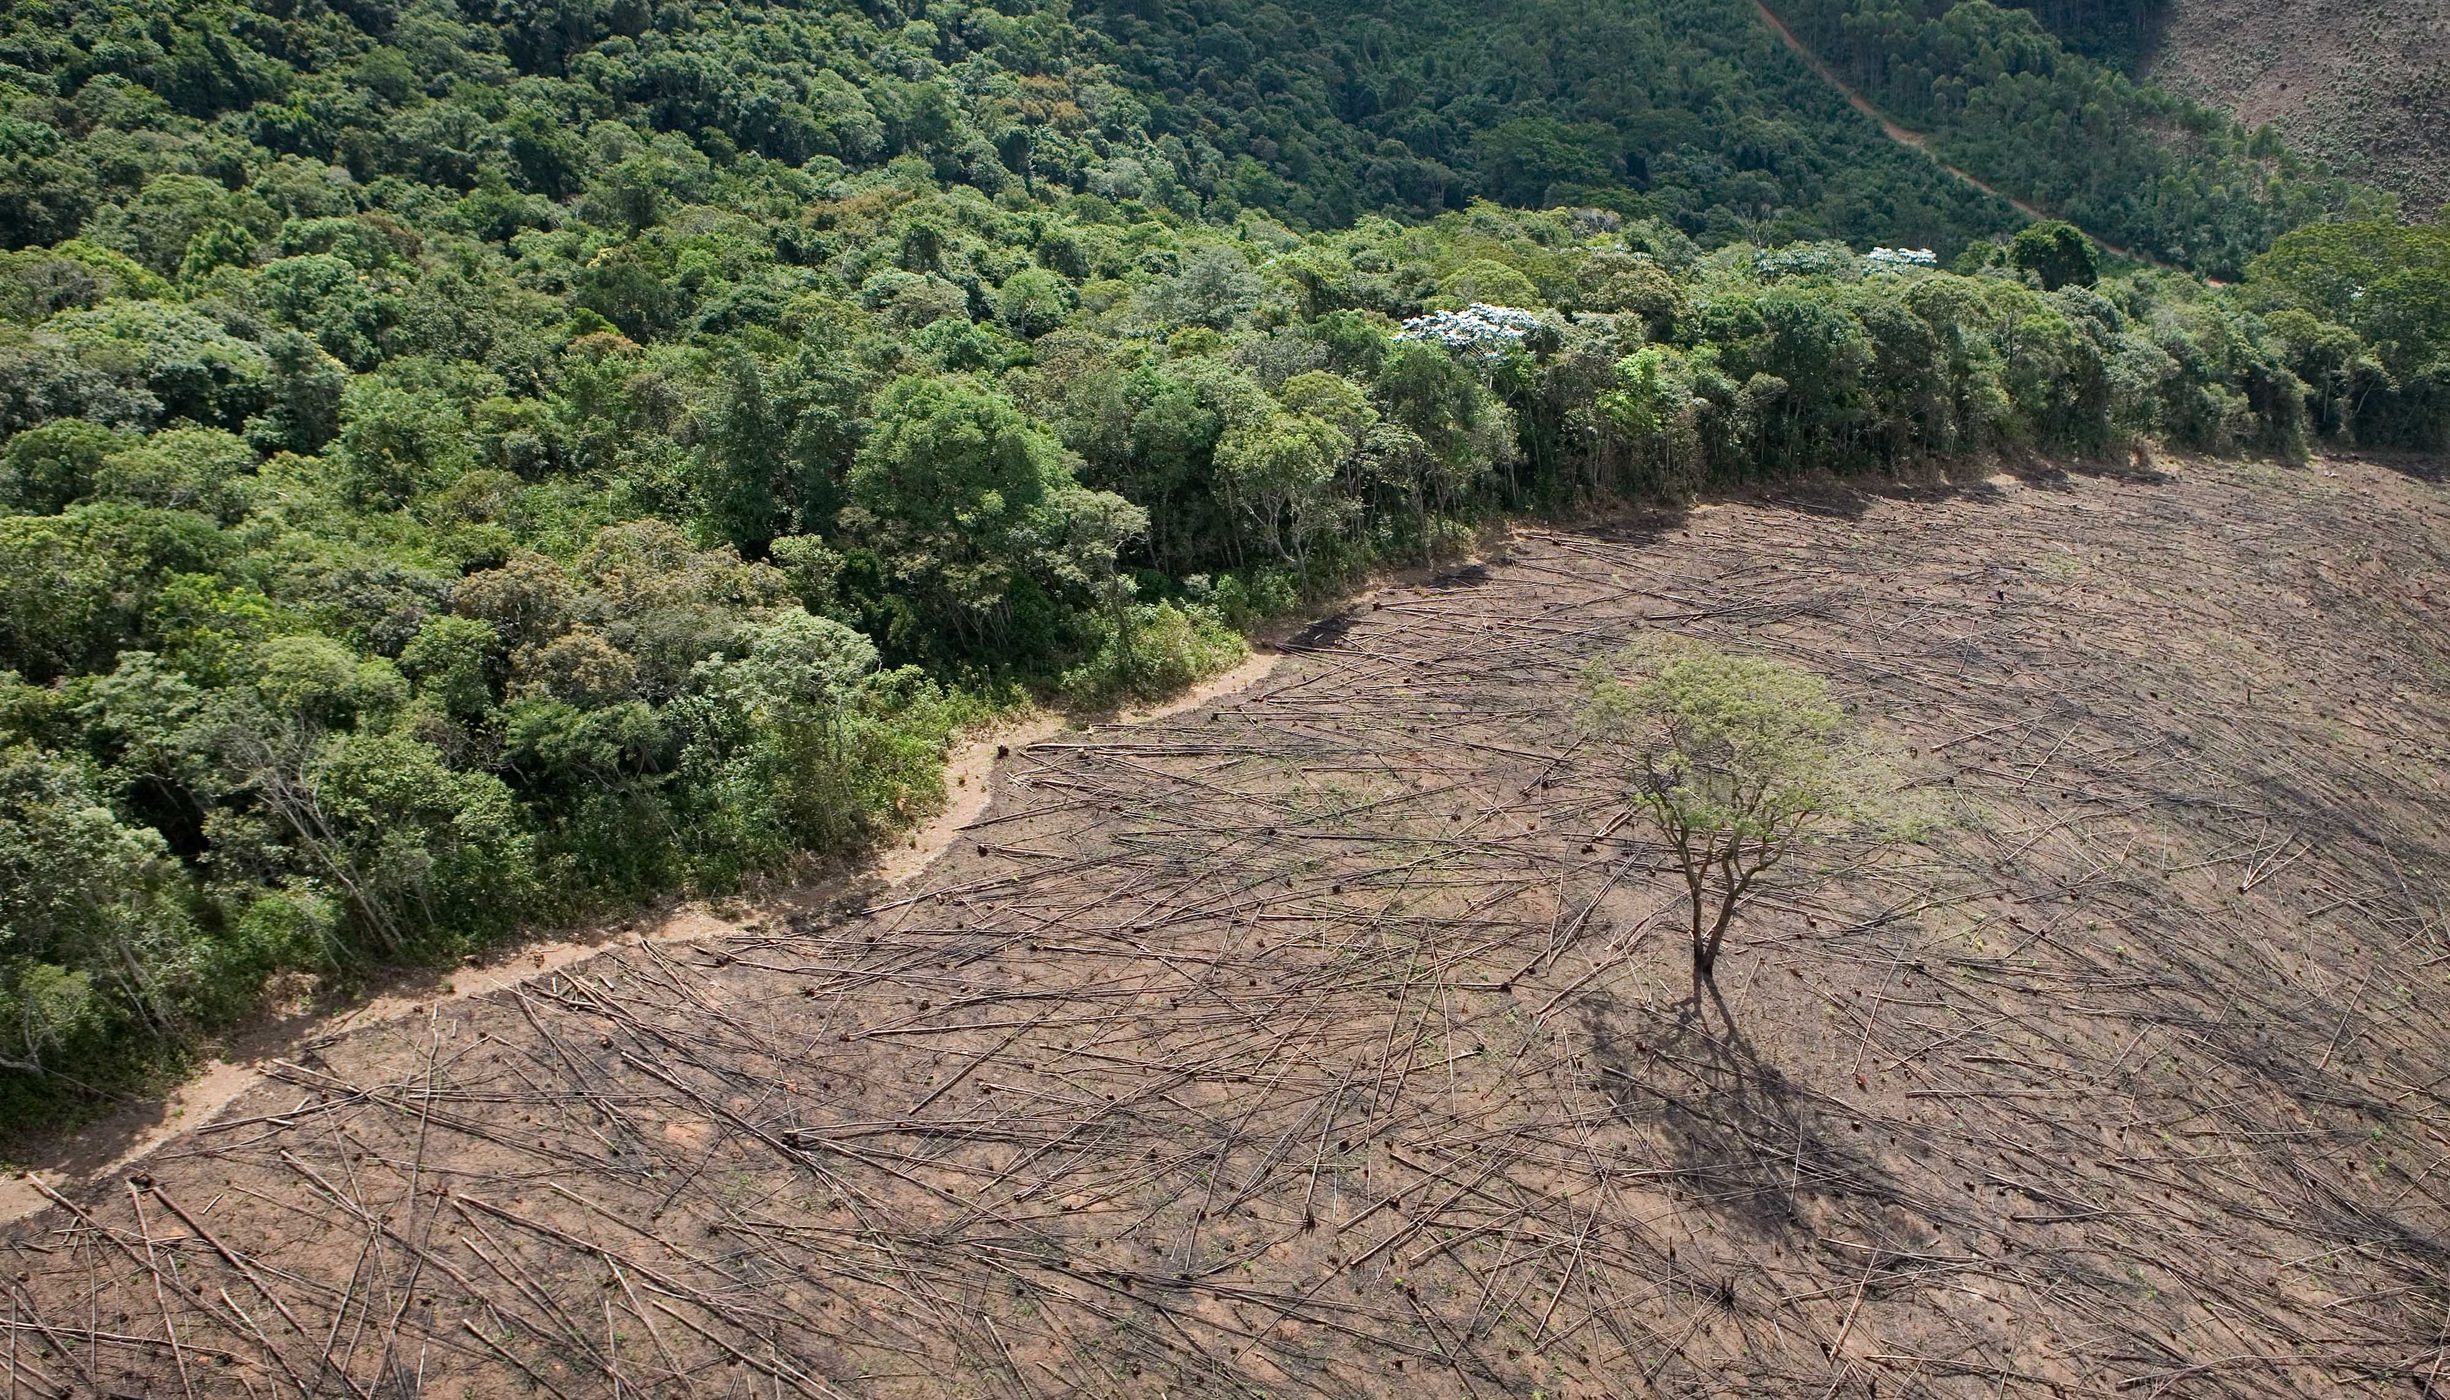 Forest being ravished by deforestation.